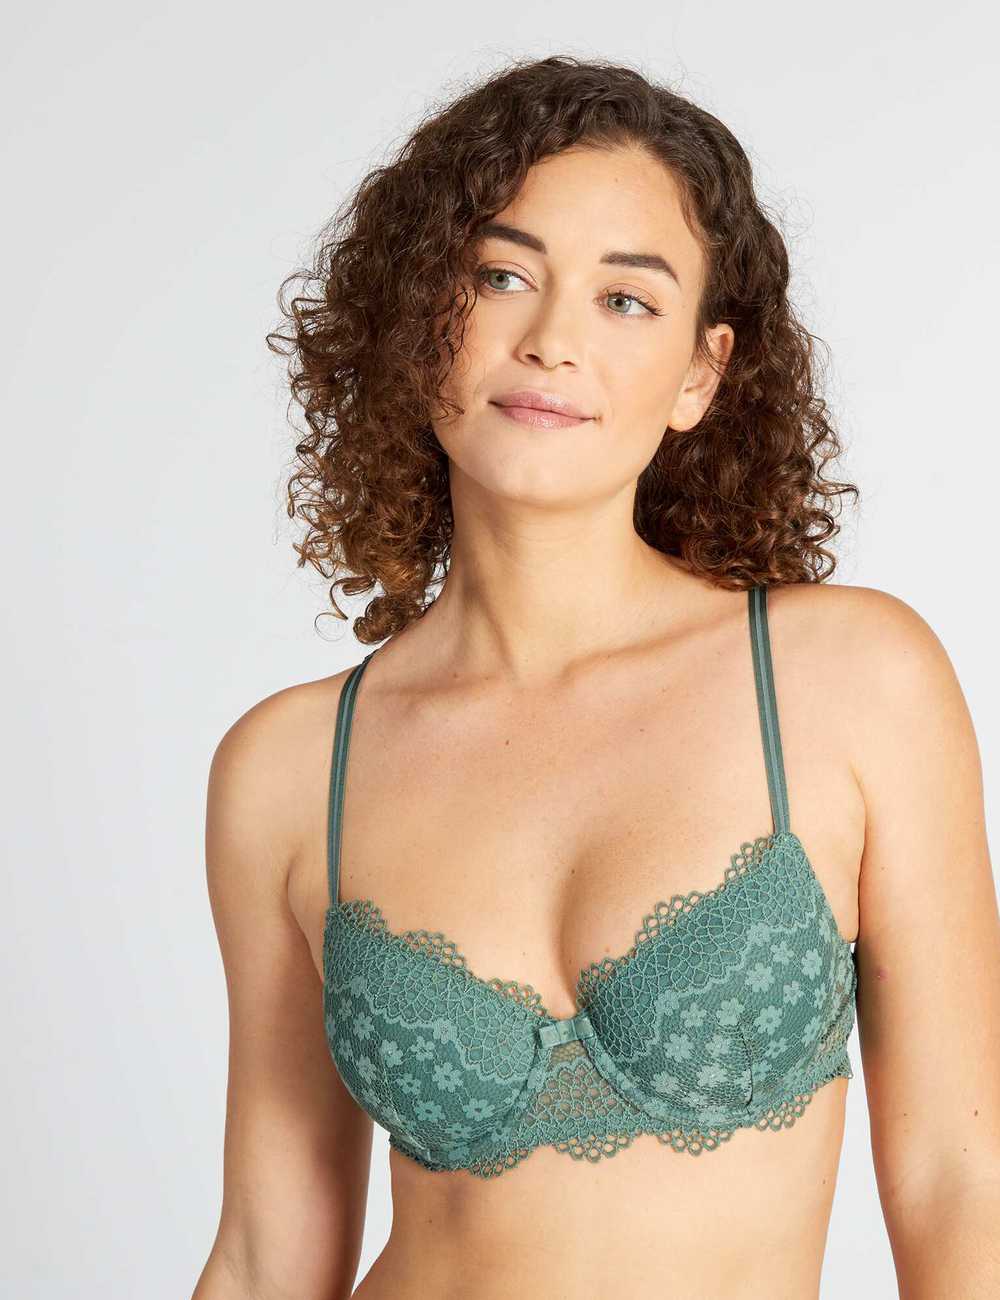 Buy Lace padded bra Online in Dubai & the UAE